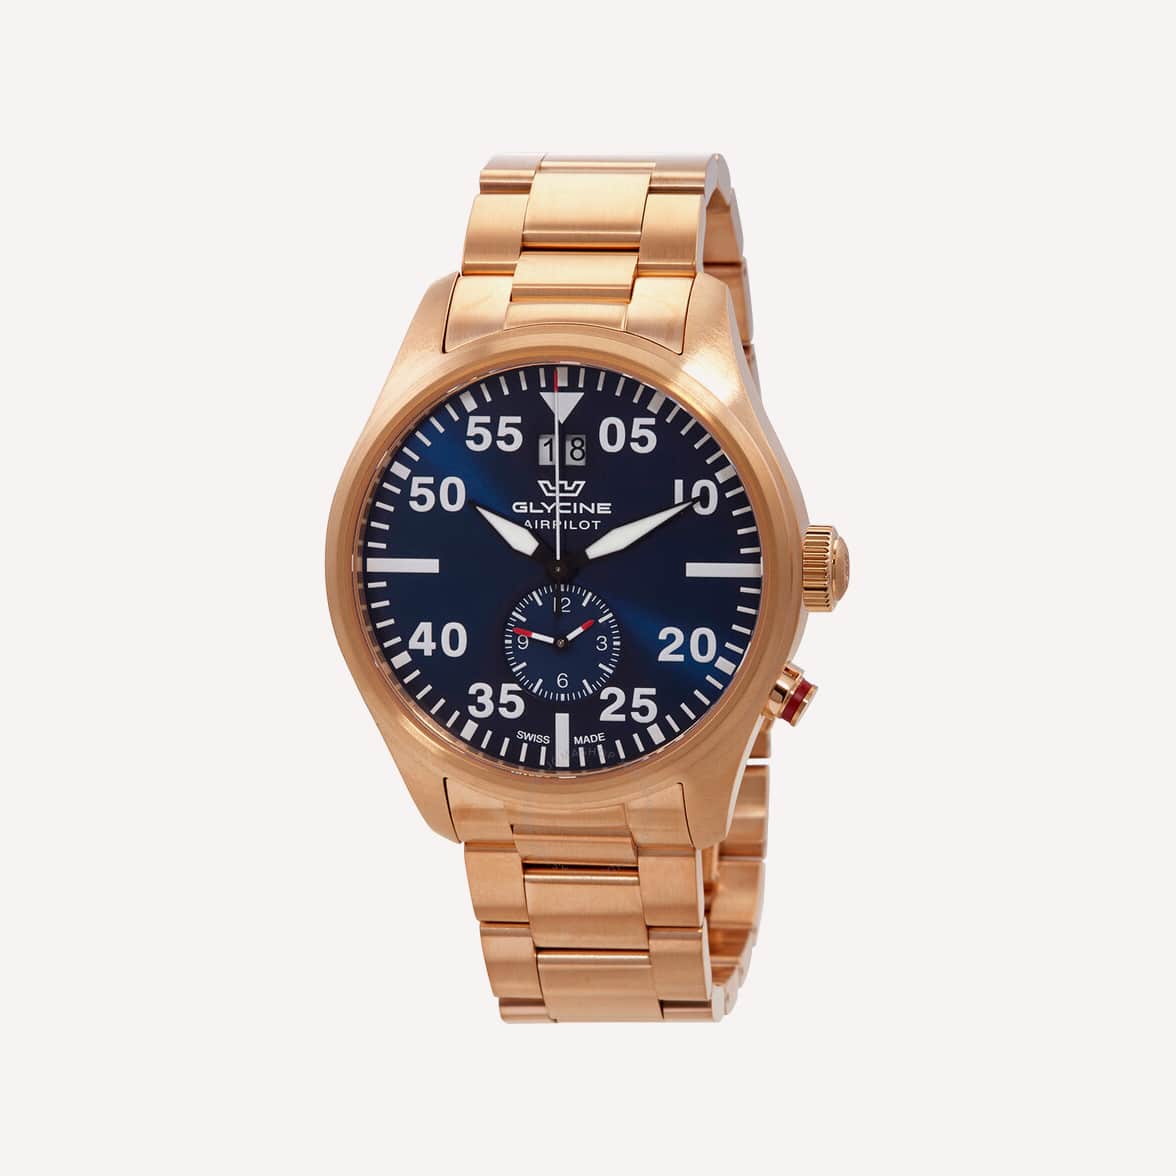 Glycine Airpilot Dual Time Chronograph Quartz Watch